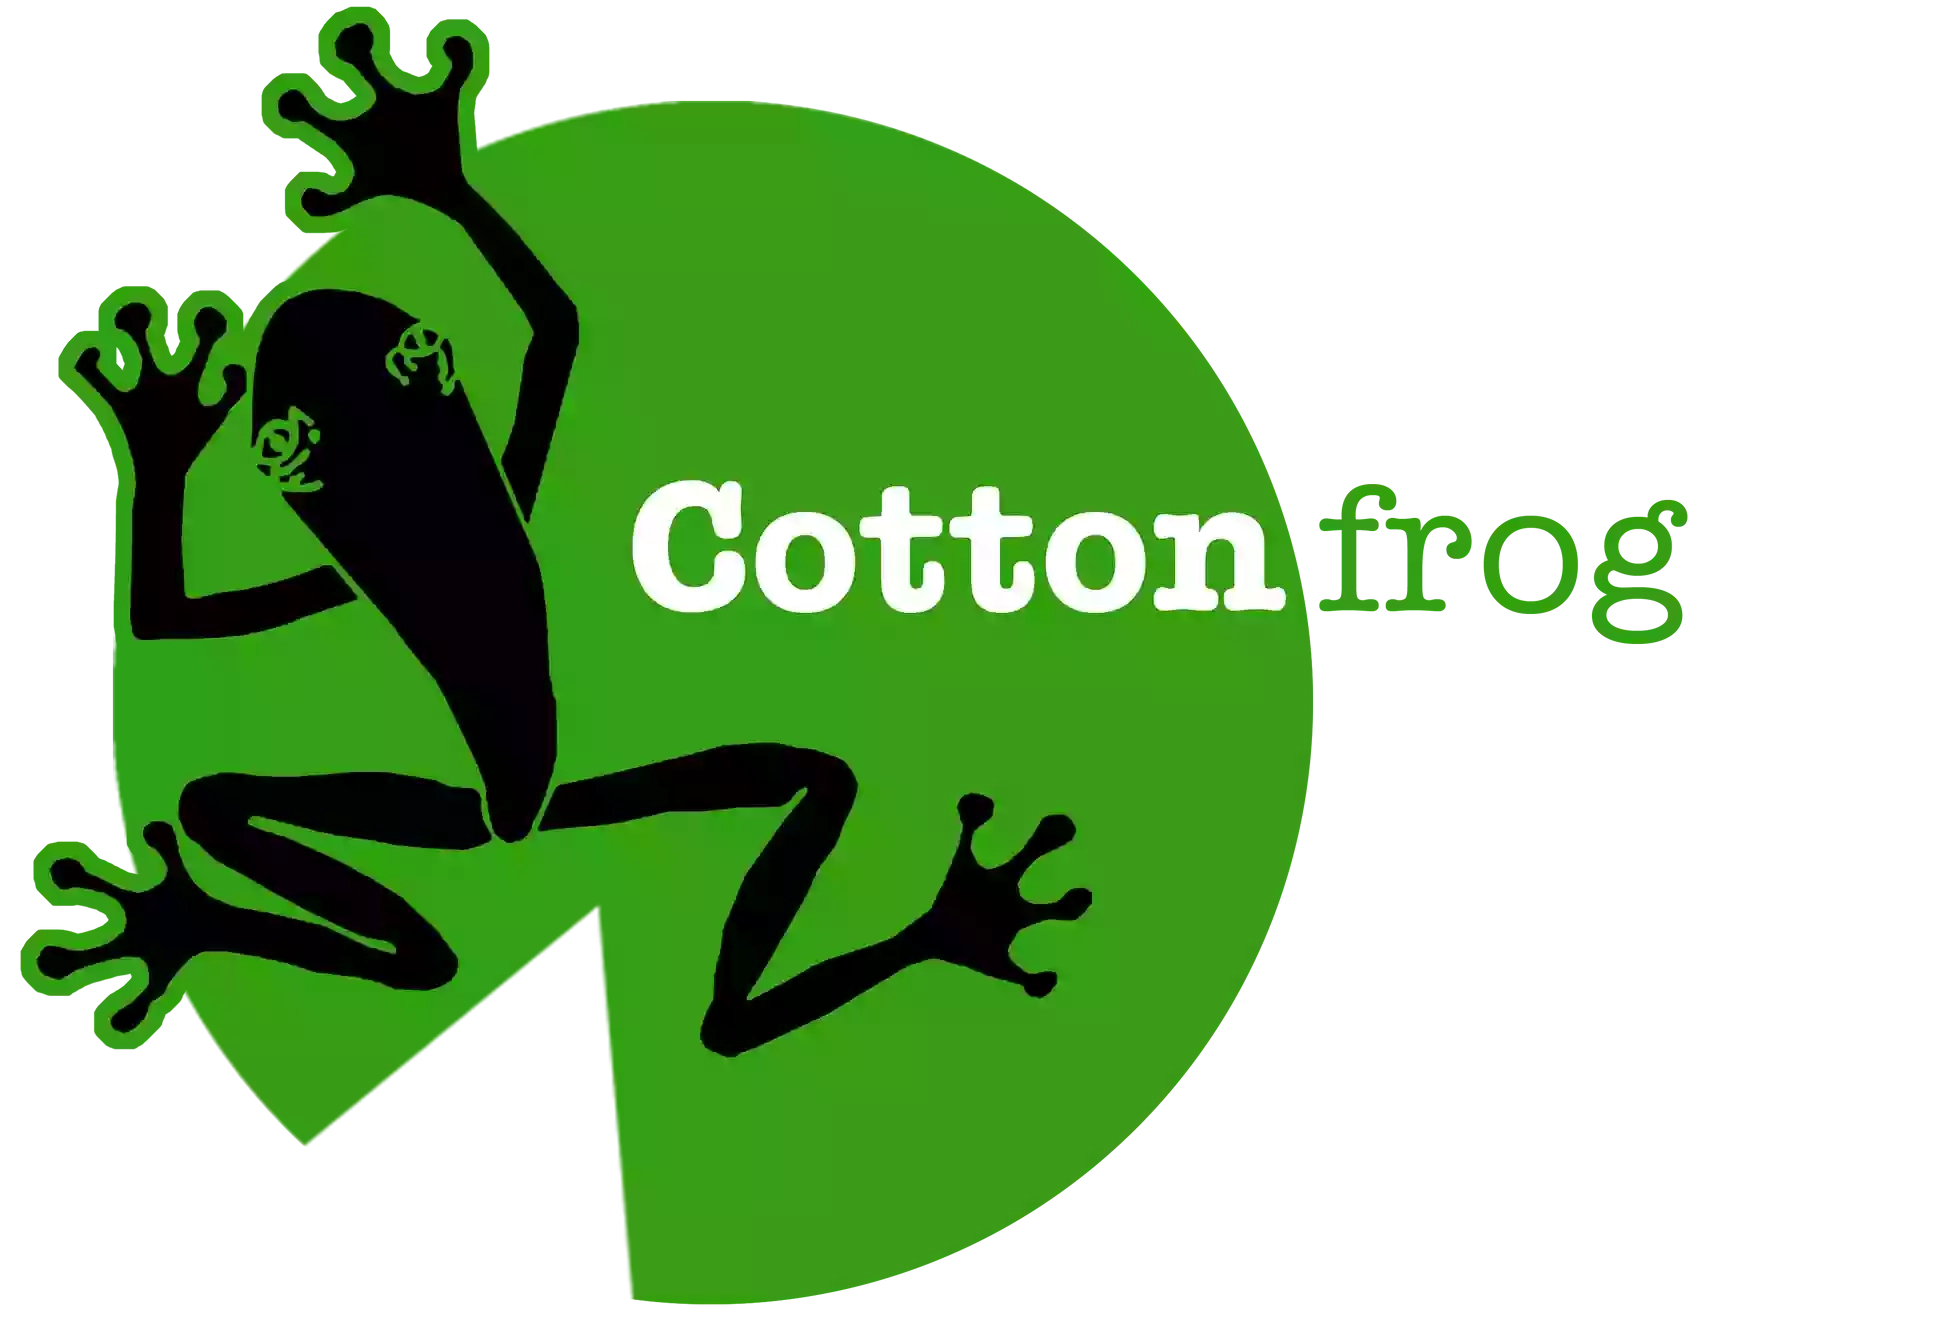 Cottonfrog